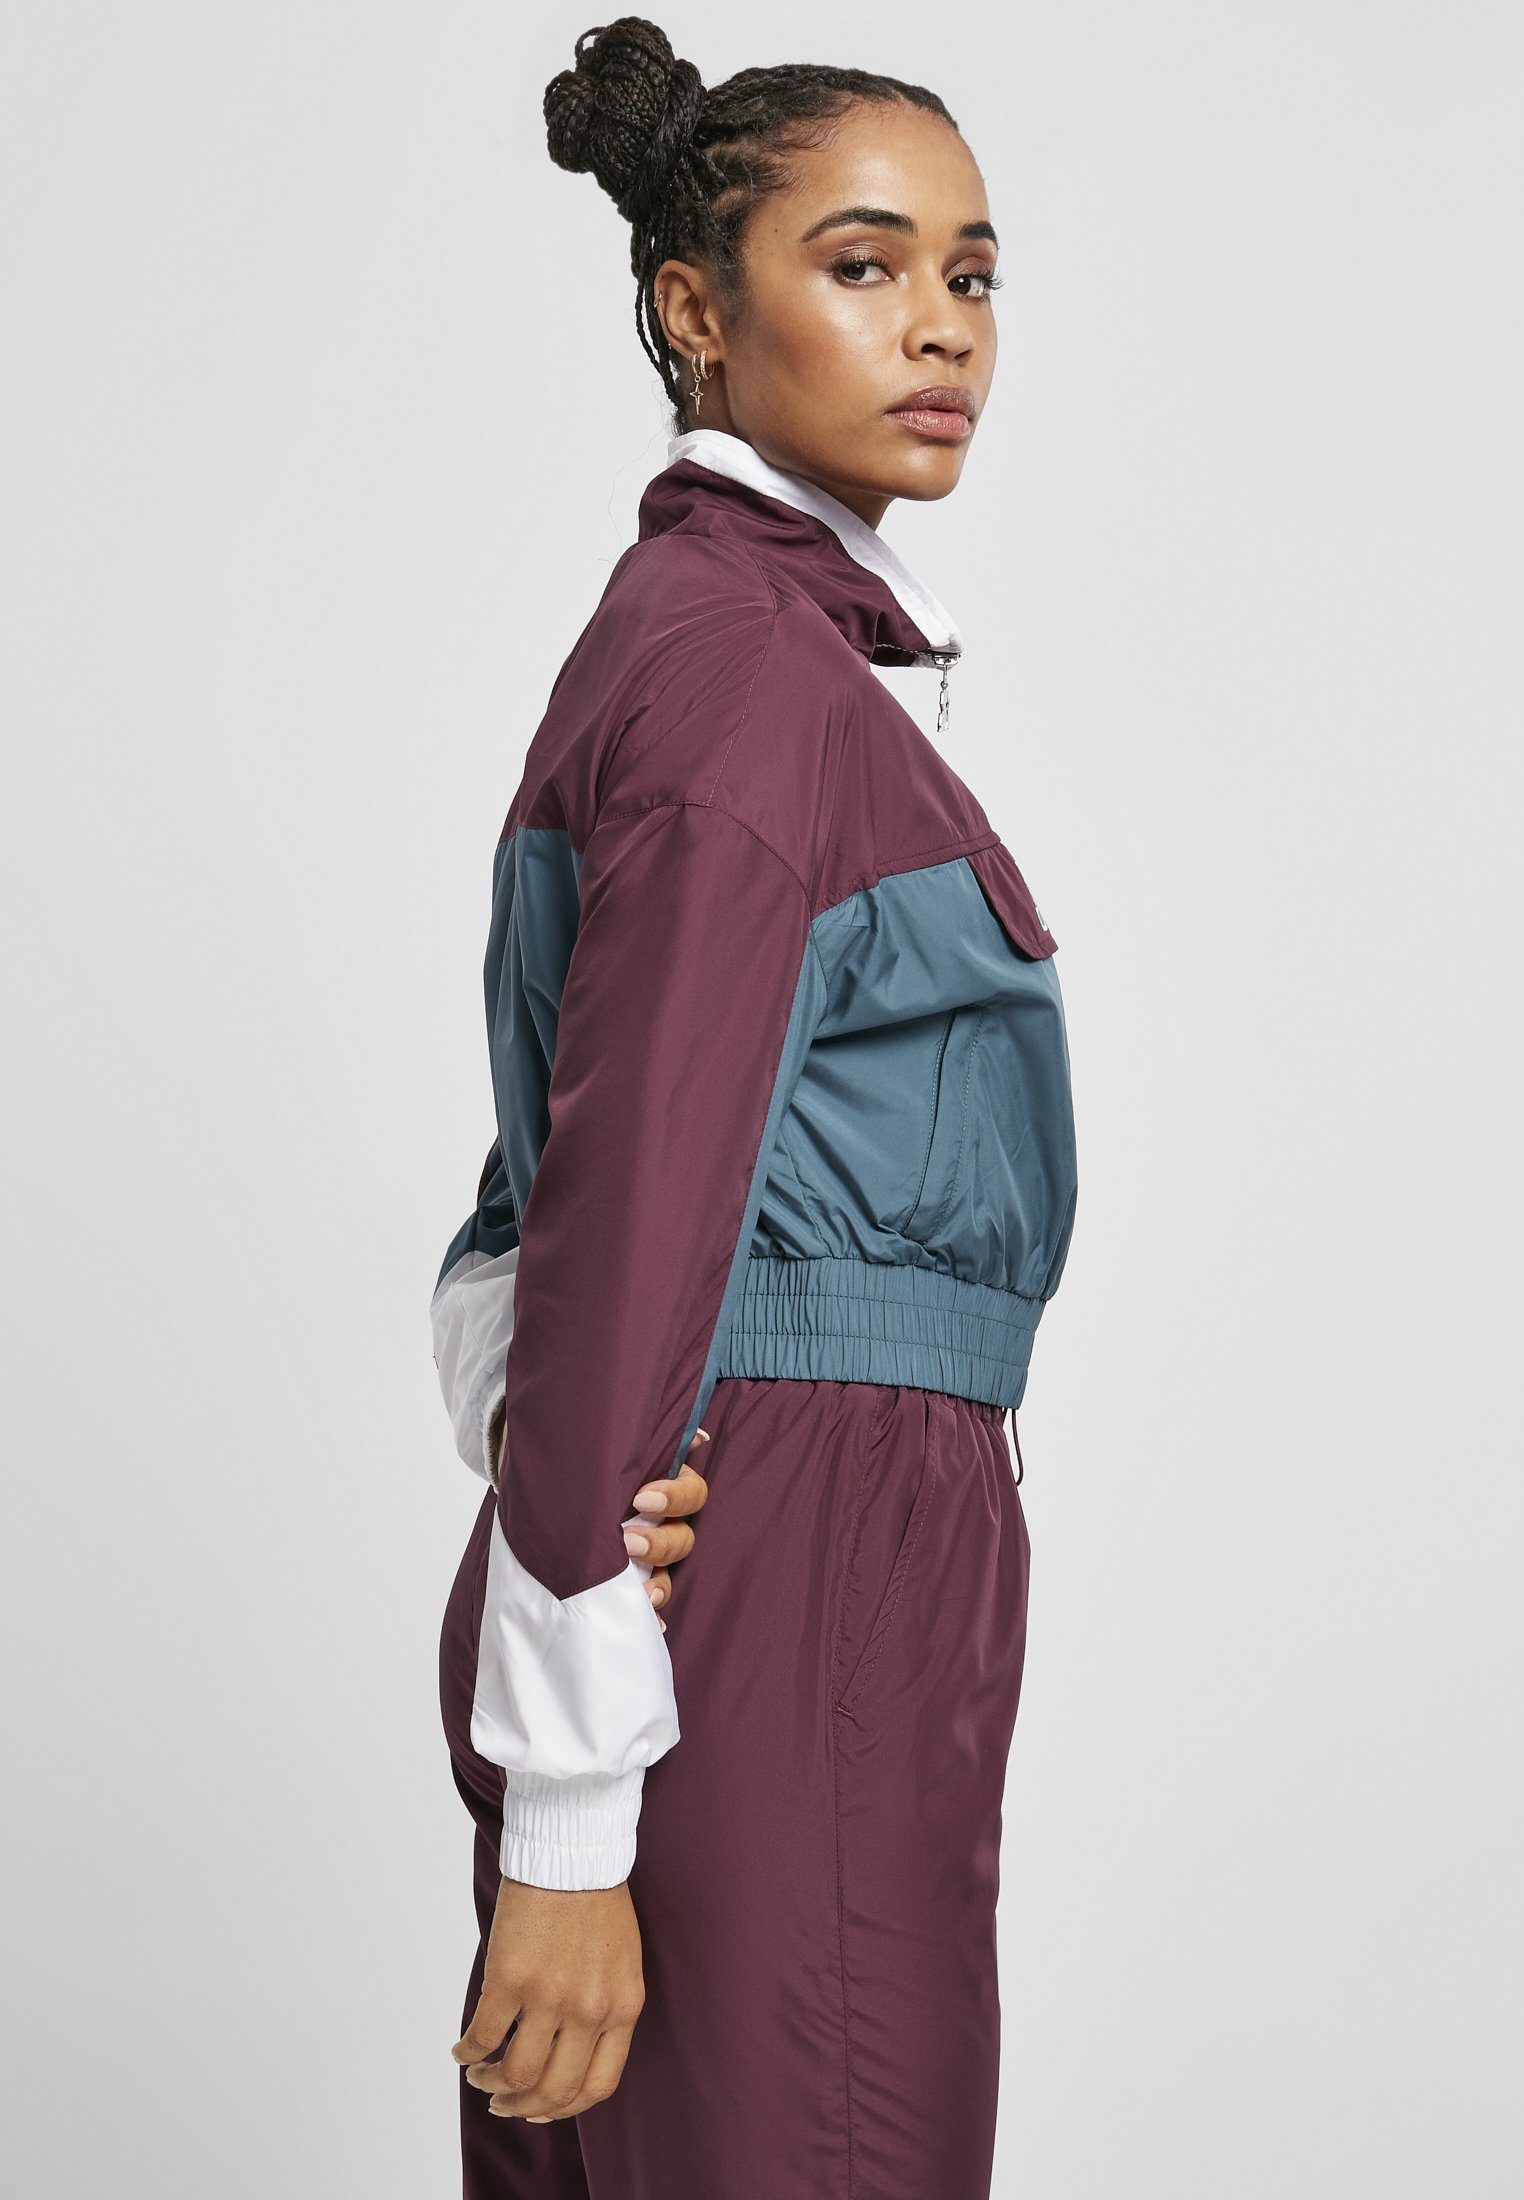 Over (1-St) Label Damen Starter Jacket Colorblock Outdoorjacke darkviolet/teal Starter Black Pull Ladies